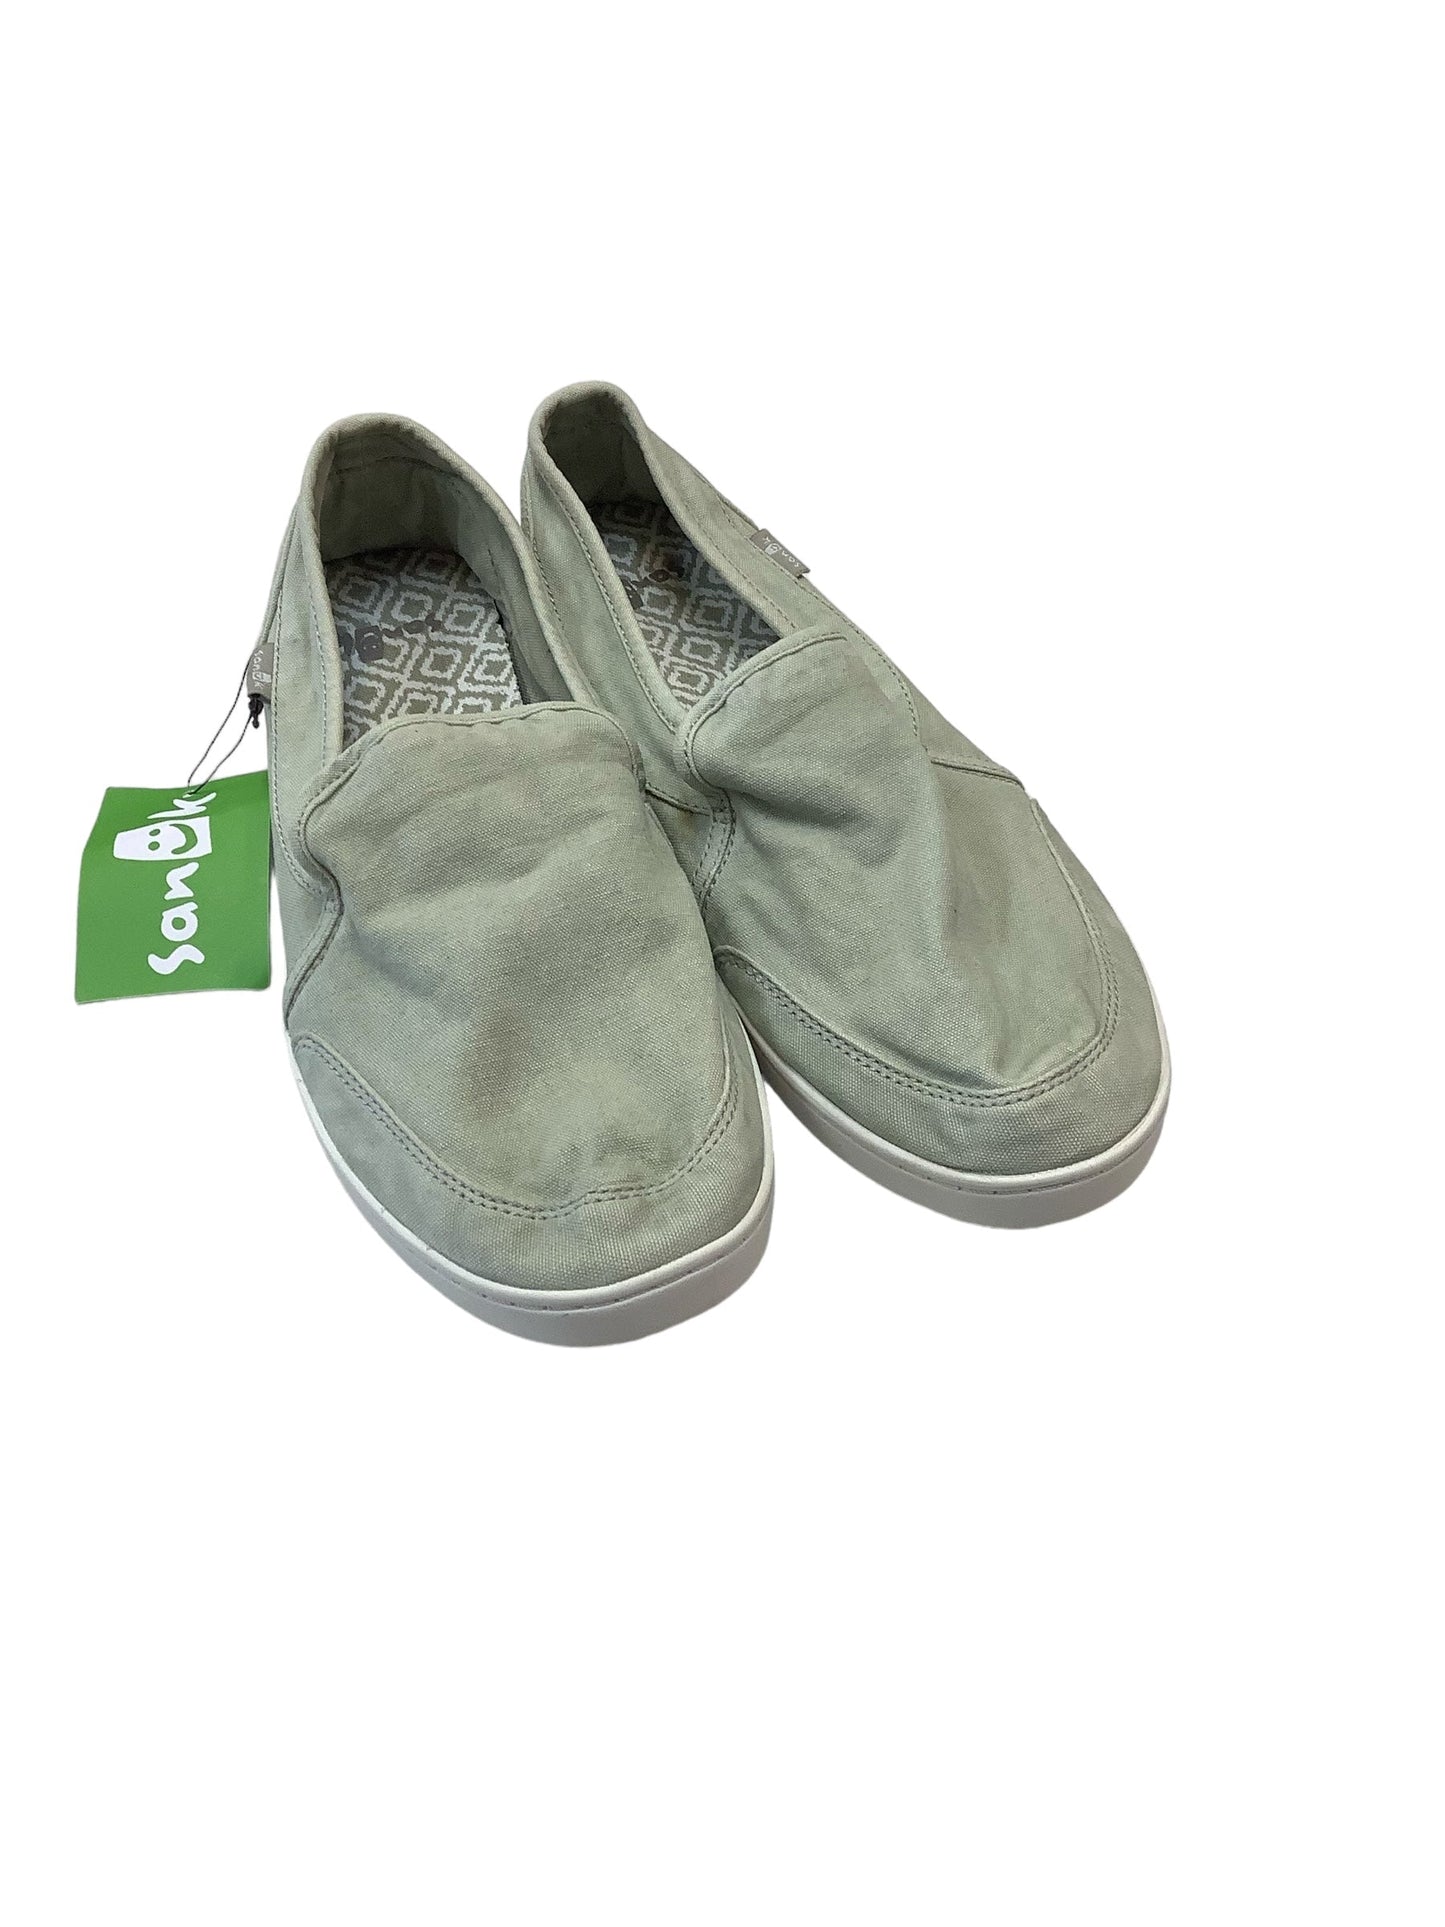 Green Shoes Flats Sanuk, Size 8